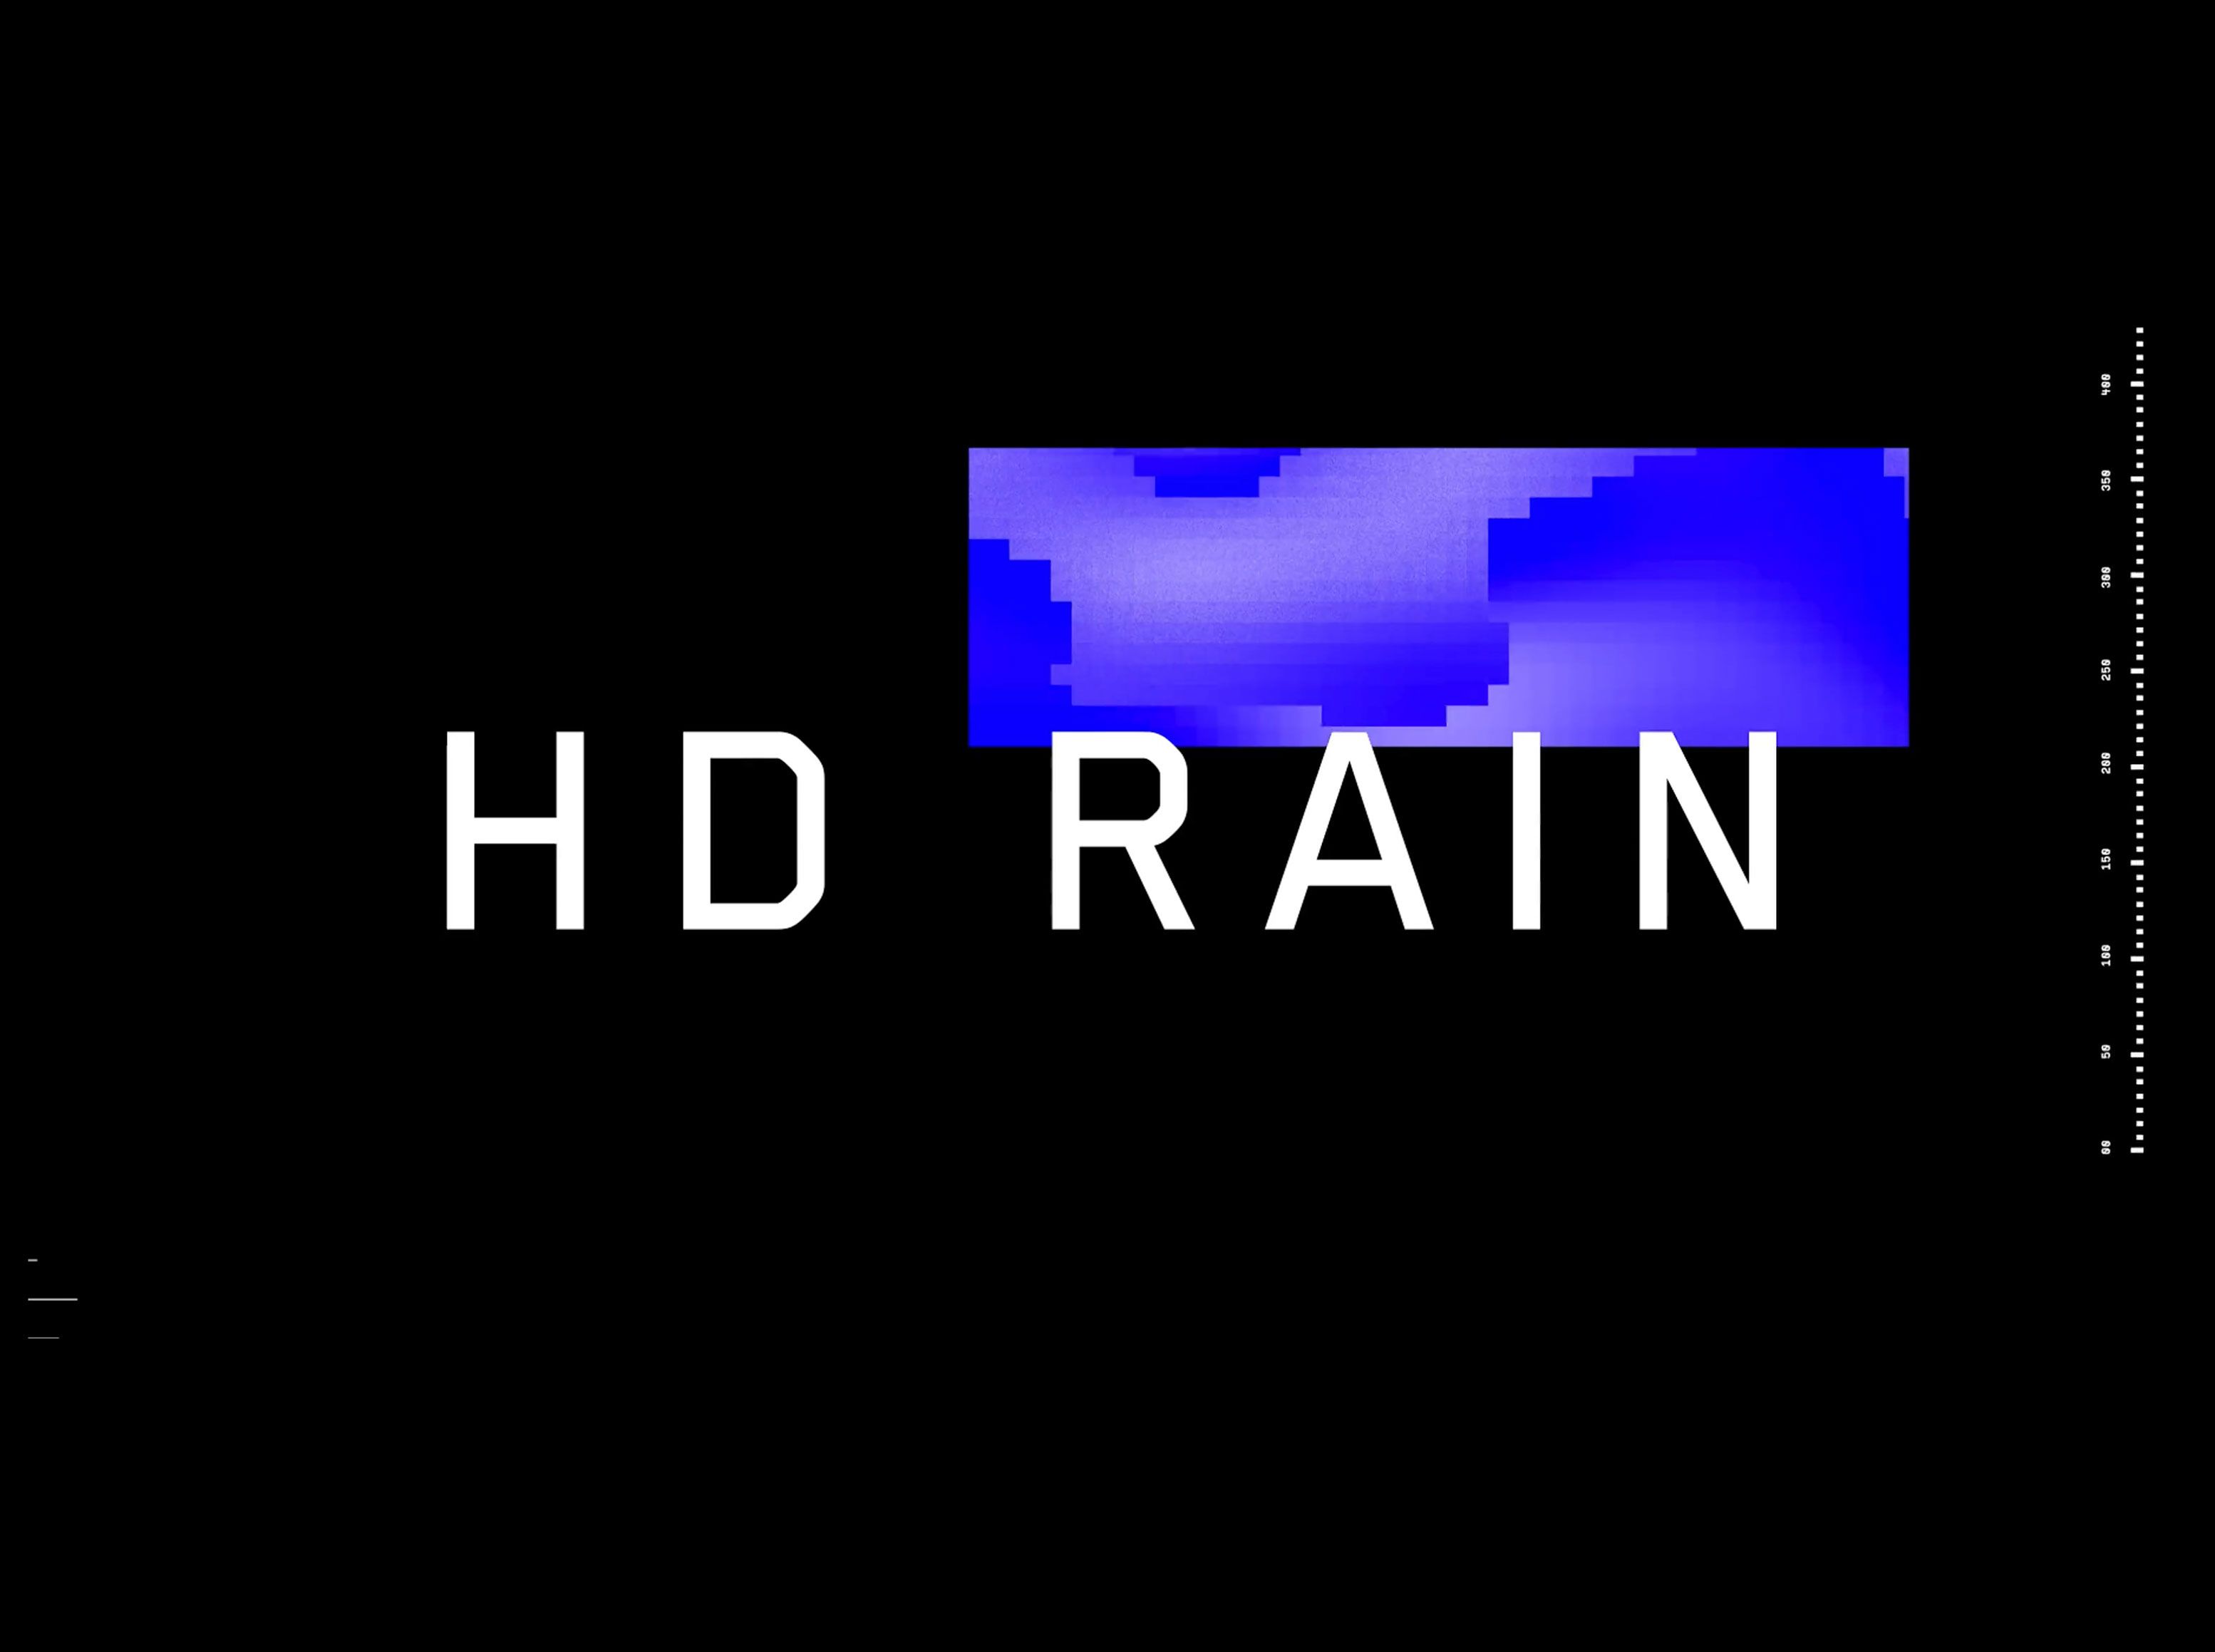 HD Rain - Brand launch